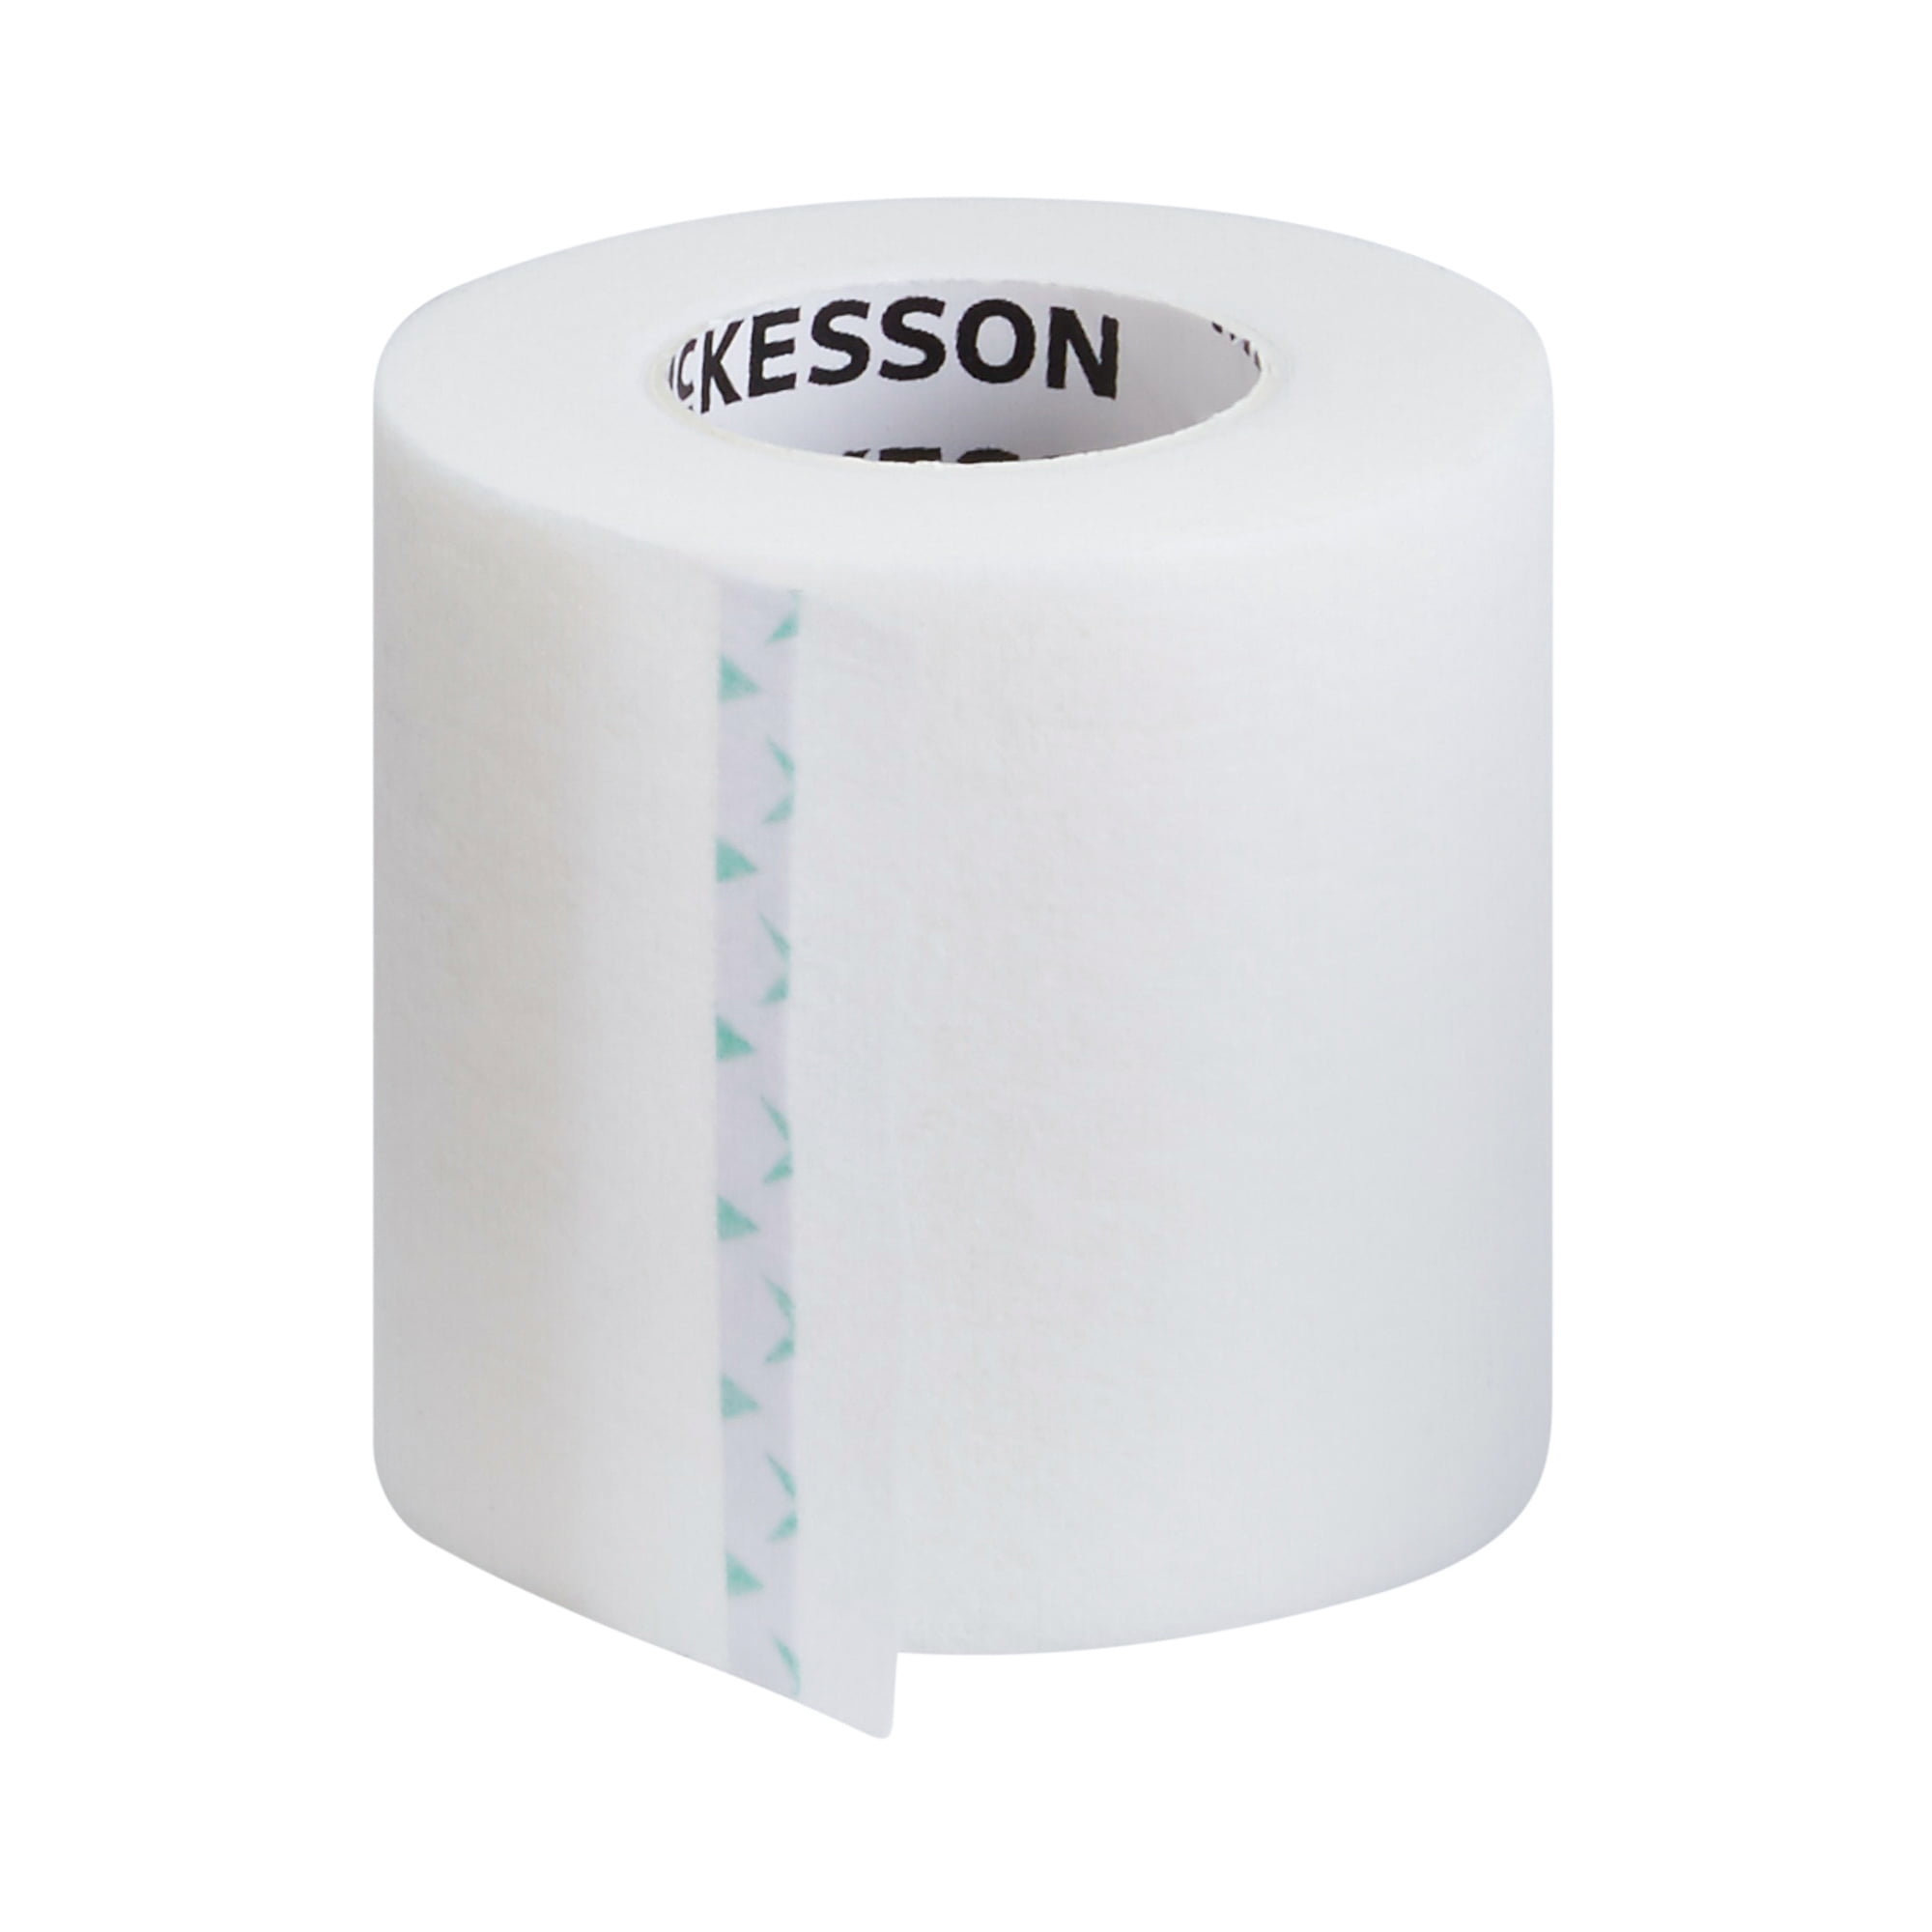 Mckesson NonSterile Transparent Surgical Tape, White – 1 Inch x 10 Yard